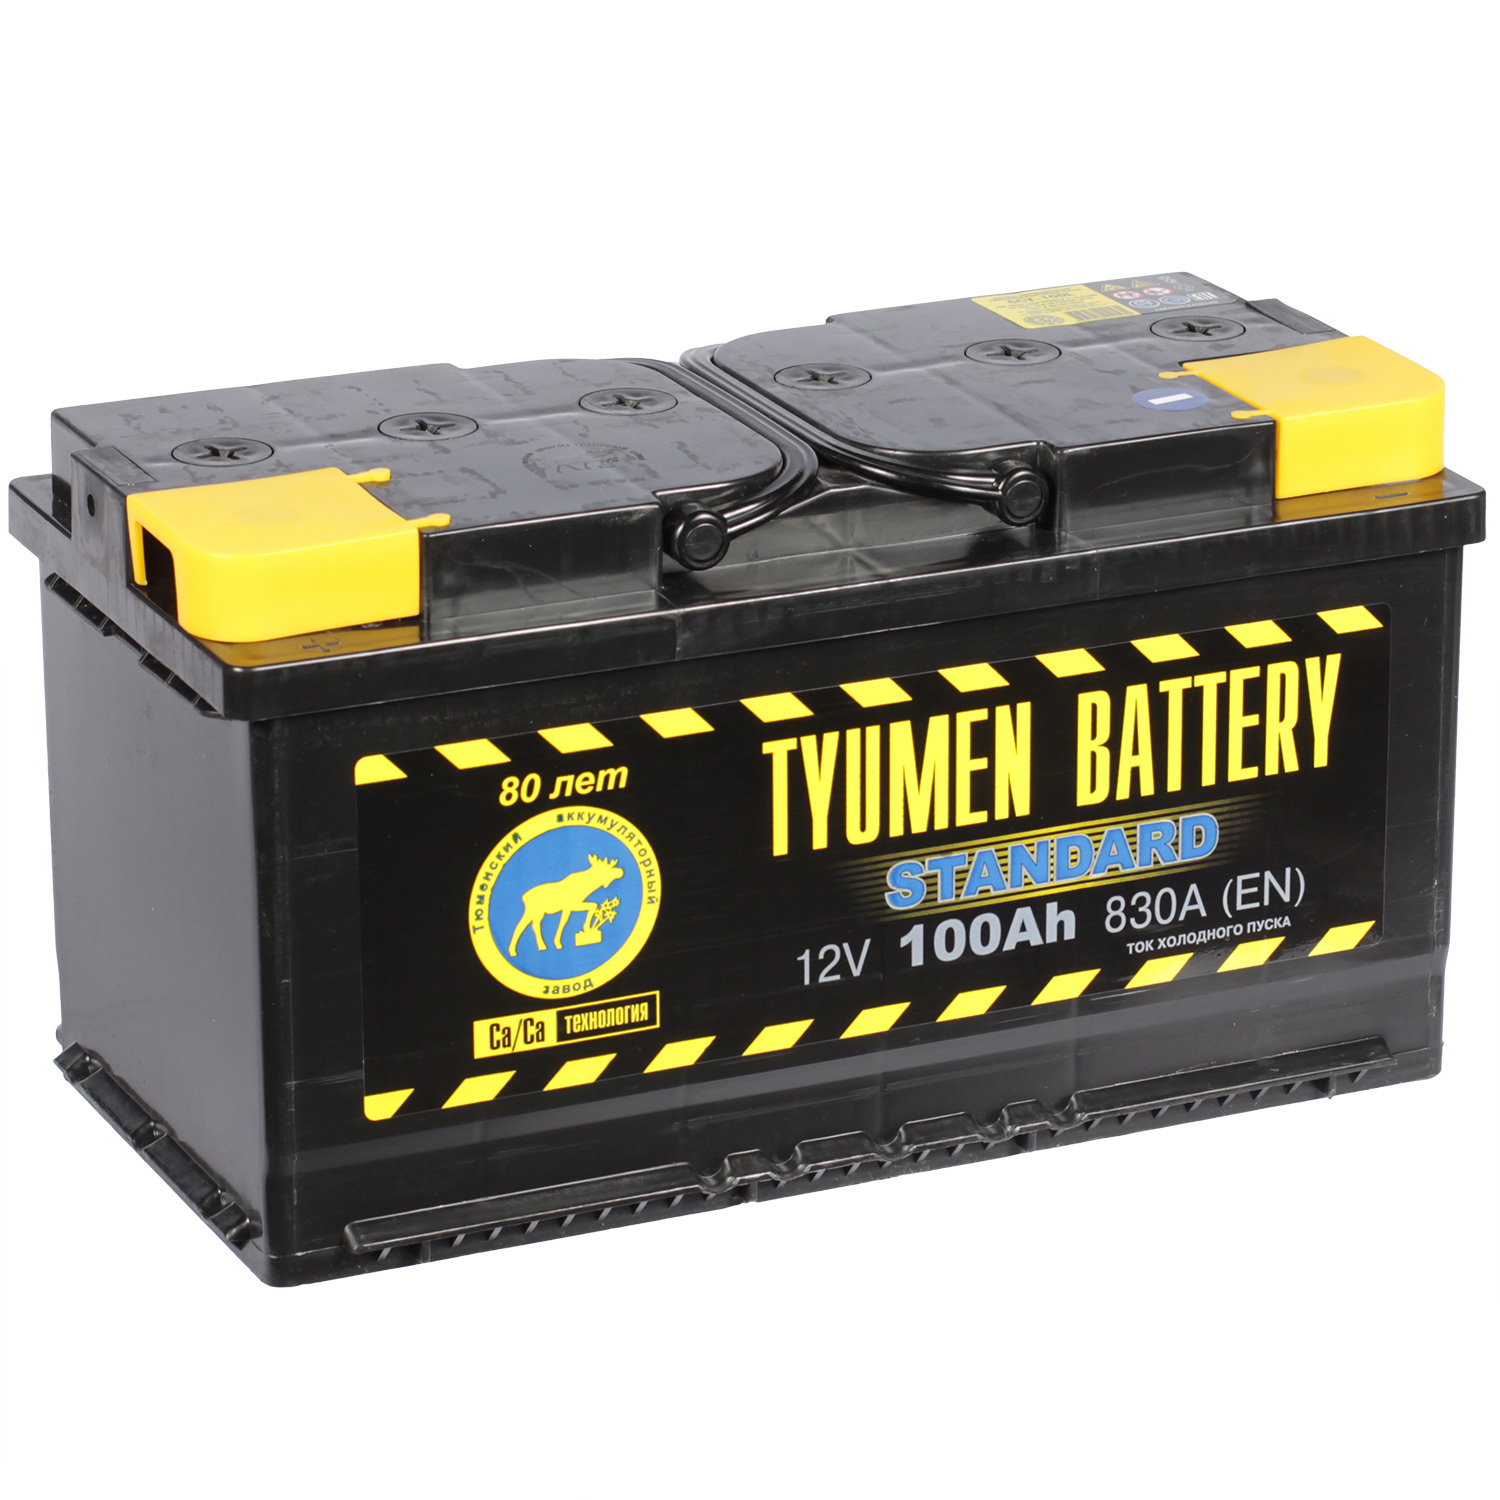 Tyumen Battery Автомобильный аккумулятор Tyumen Battery Standard 100 Ач прямая полярность L5 tyumen battery автомобильный аккумулятор tyumen battery 61 ач прямая полярность lb2